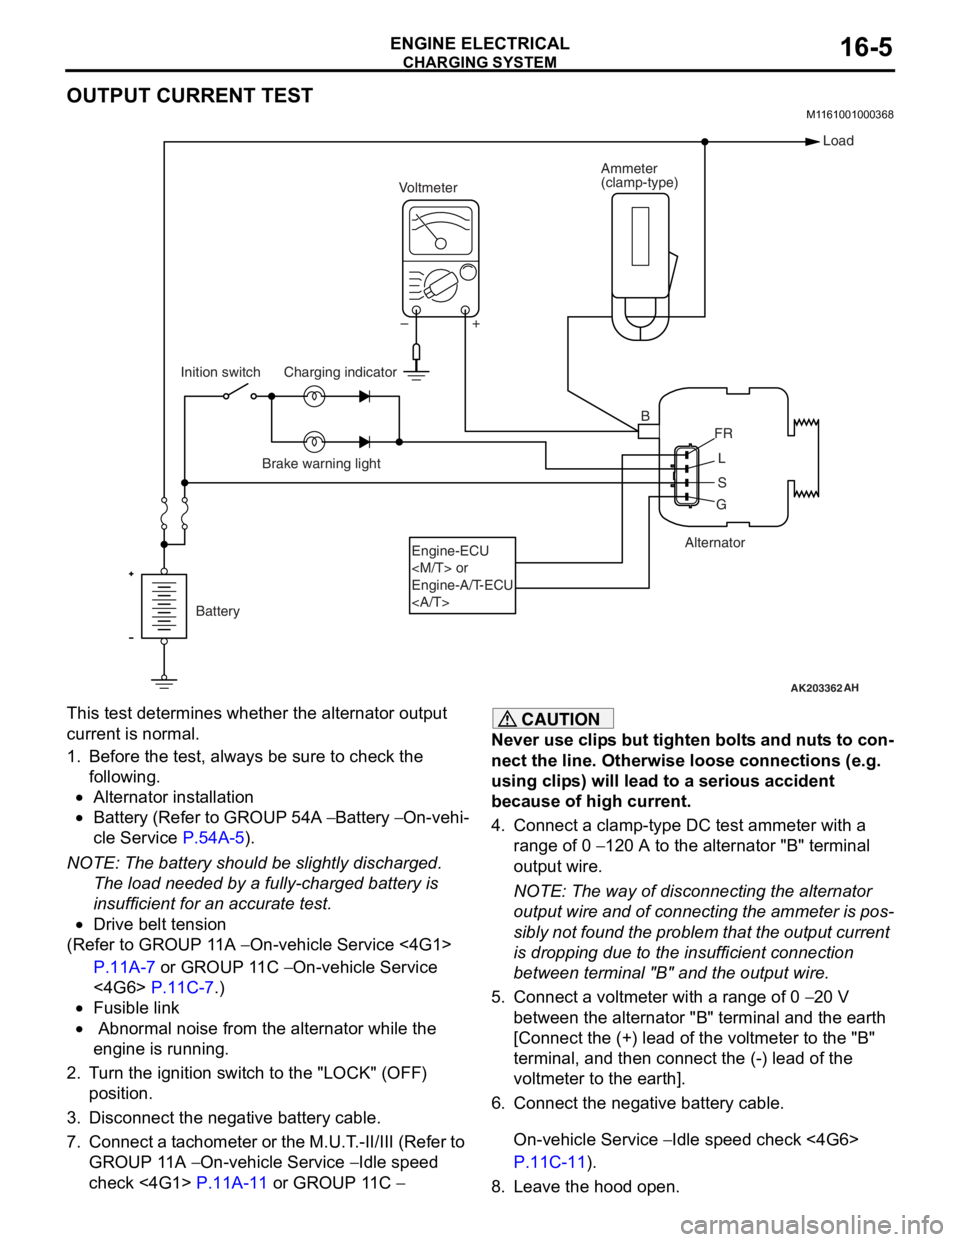 MITSUBISHI LANCER IX 2006  Service Manual 
CHARGING SYSTEM
ENGINE ELECTRICAL16-5
OUTPUT CURRENT TEST
M1161001000368
AK203362
Alternator
Ammeter
(clamp-type)
Voltmeter
Battery
Inition switch
Engine-ECU
<M/T> or
Engine-A/T-ECU
<A/T> Load
B FR
L